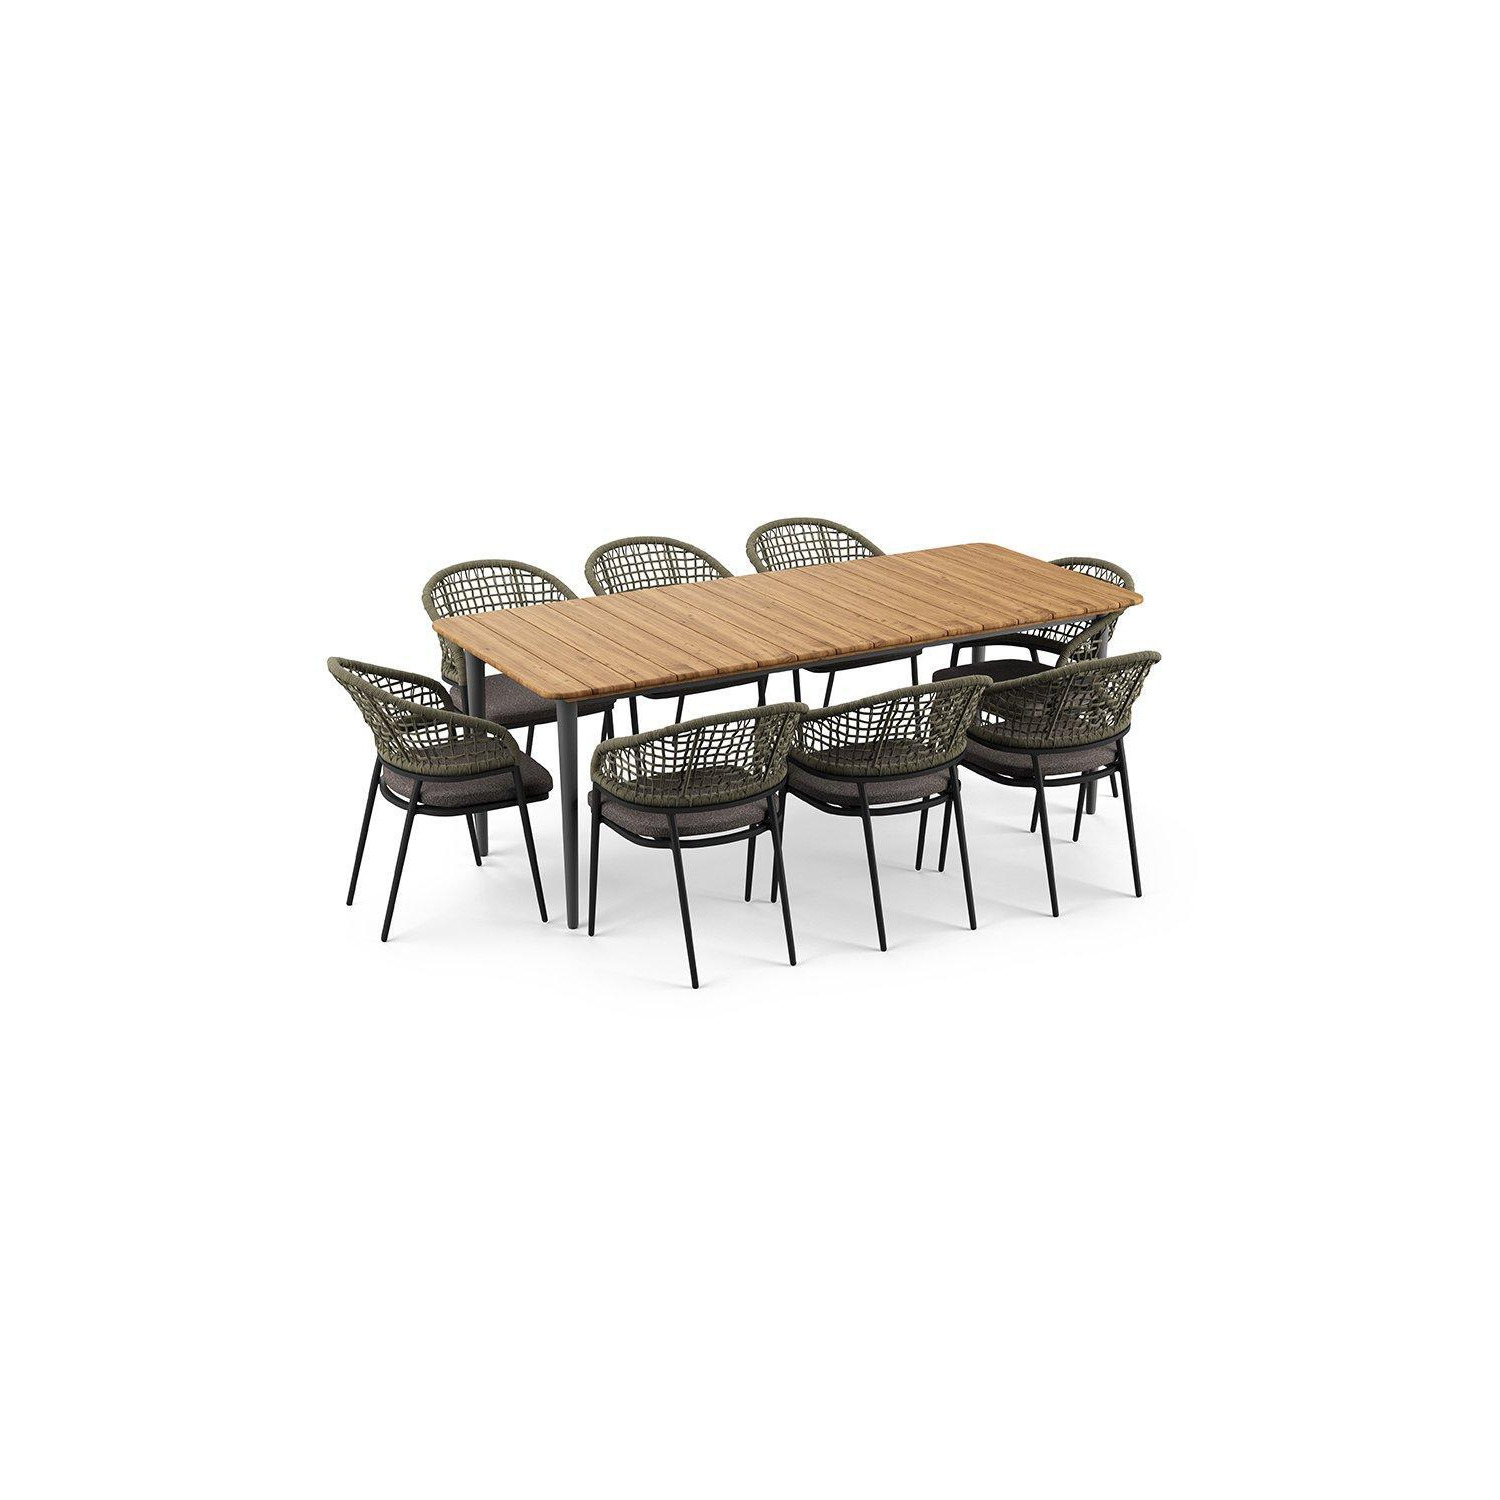 Kalama 8 Seat Rectangular Dining Set with Teak Table in Charcoal - image 1